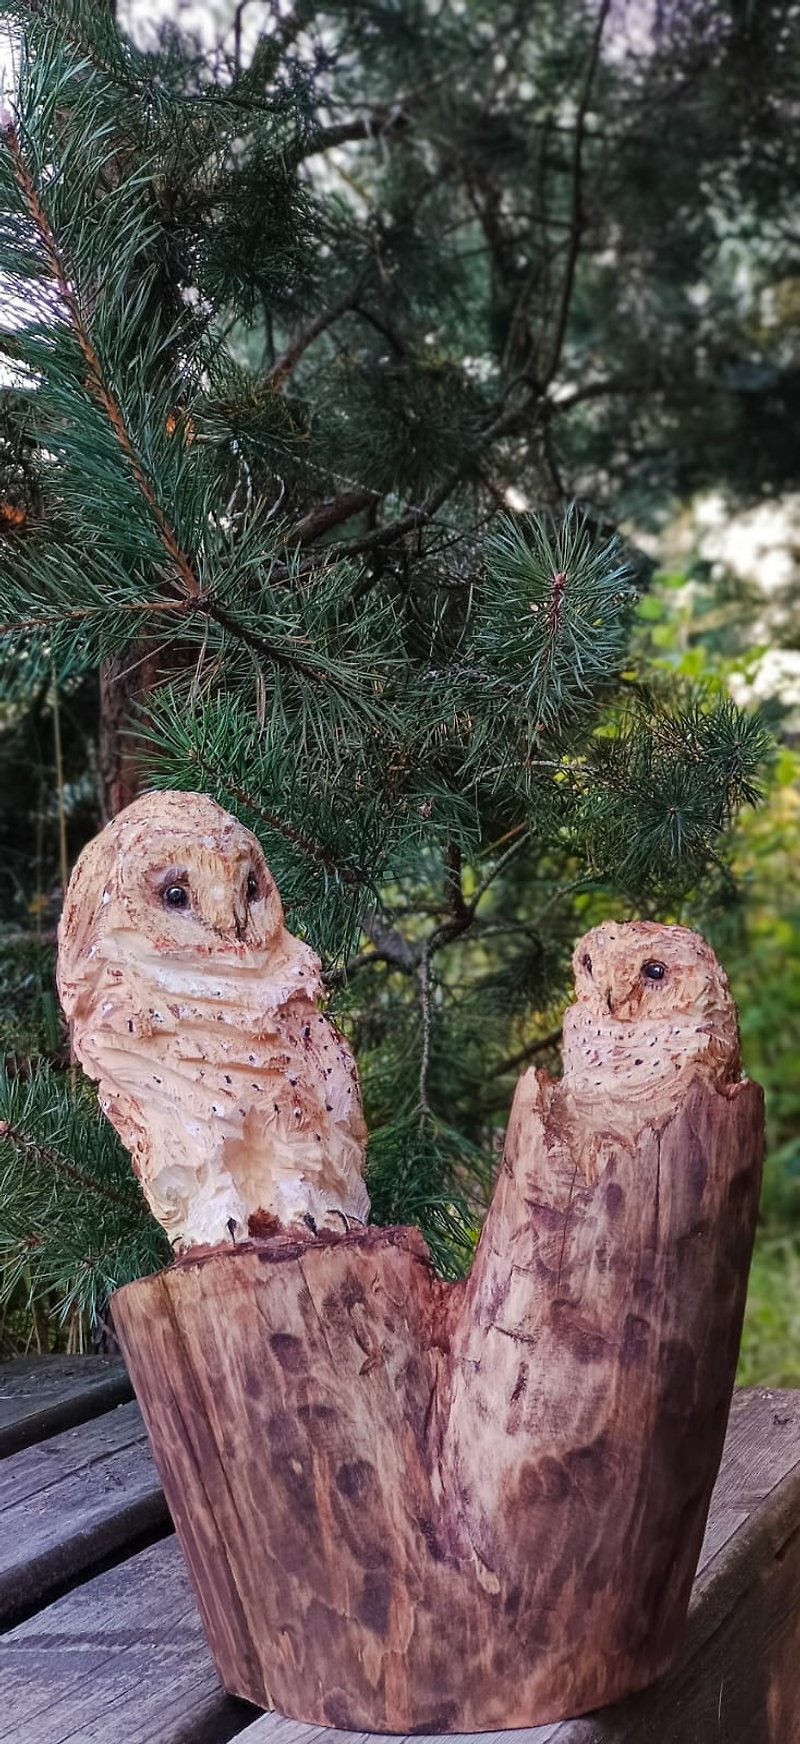 Owl family in wood - ตุ๊กตา - ไม้ สีนำ้ตาล